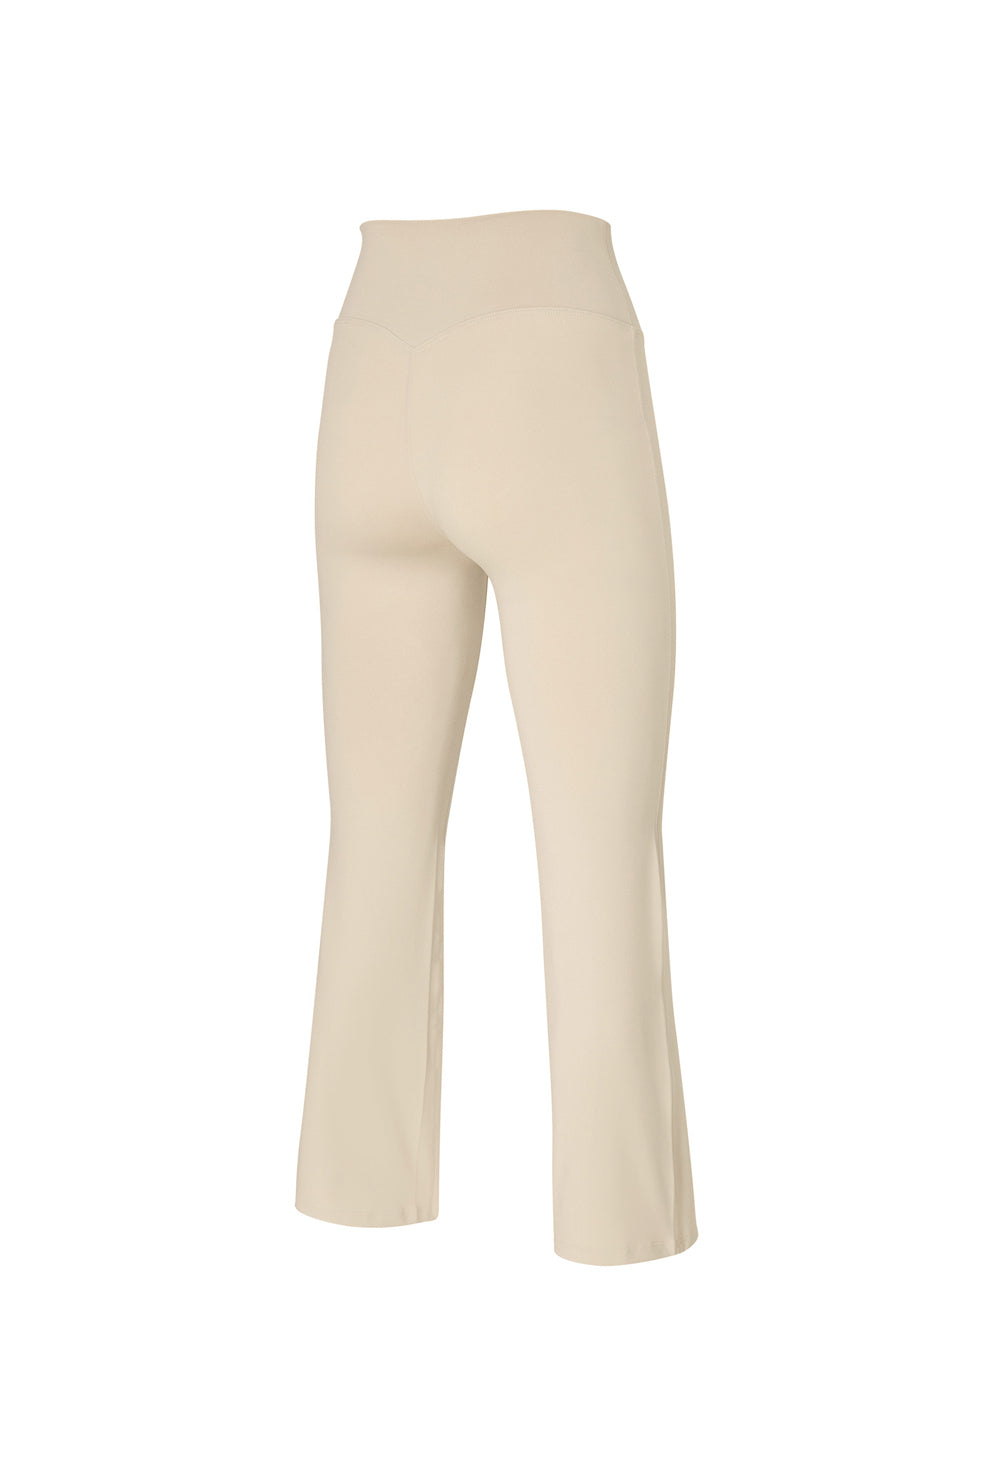 XELLA Intension Boots Cut Pants - Cream Swan